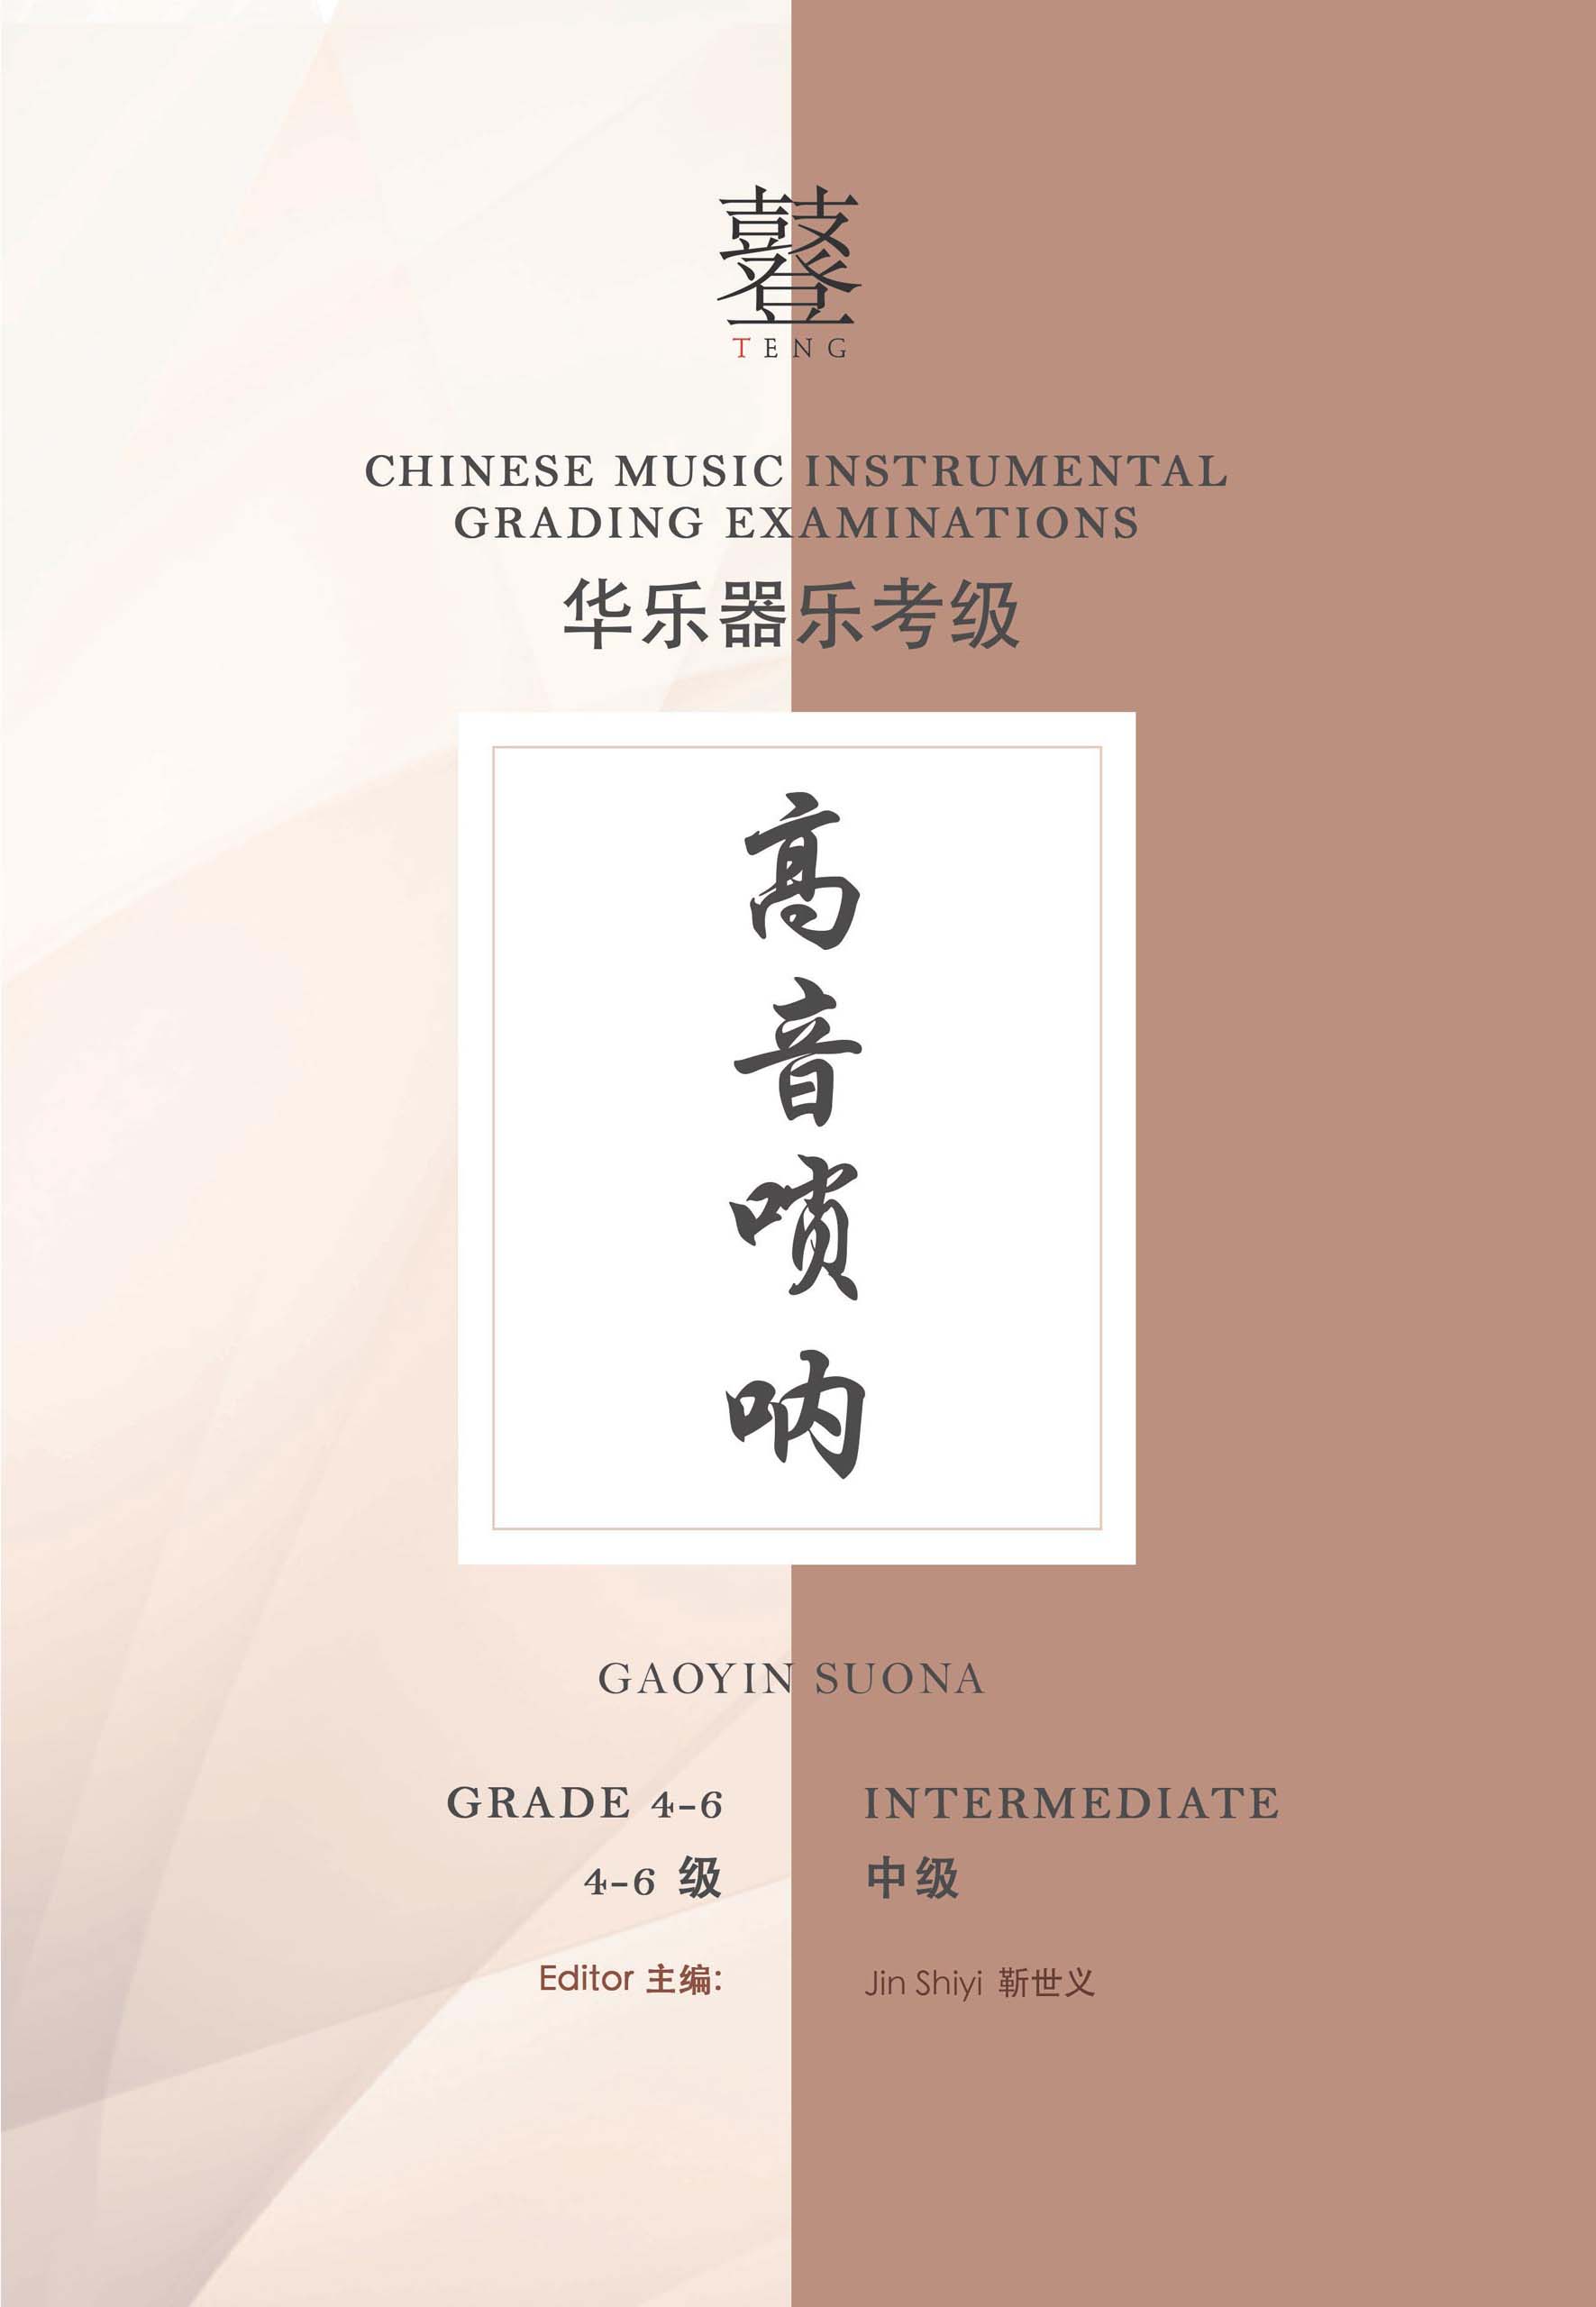 Gaoyin Suona Grading Examination Book by Teng (Intermediate Grade 4-6) featured photo